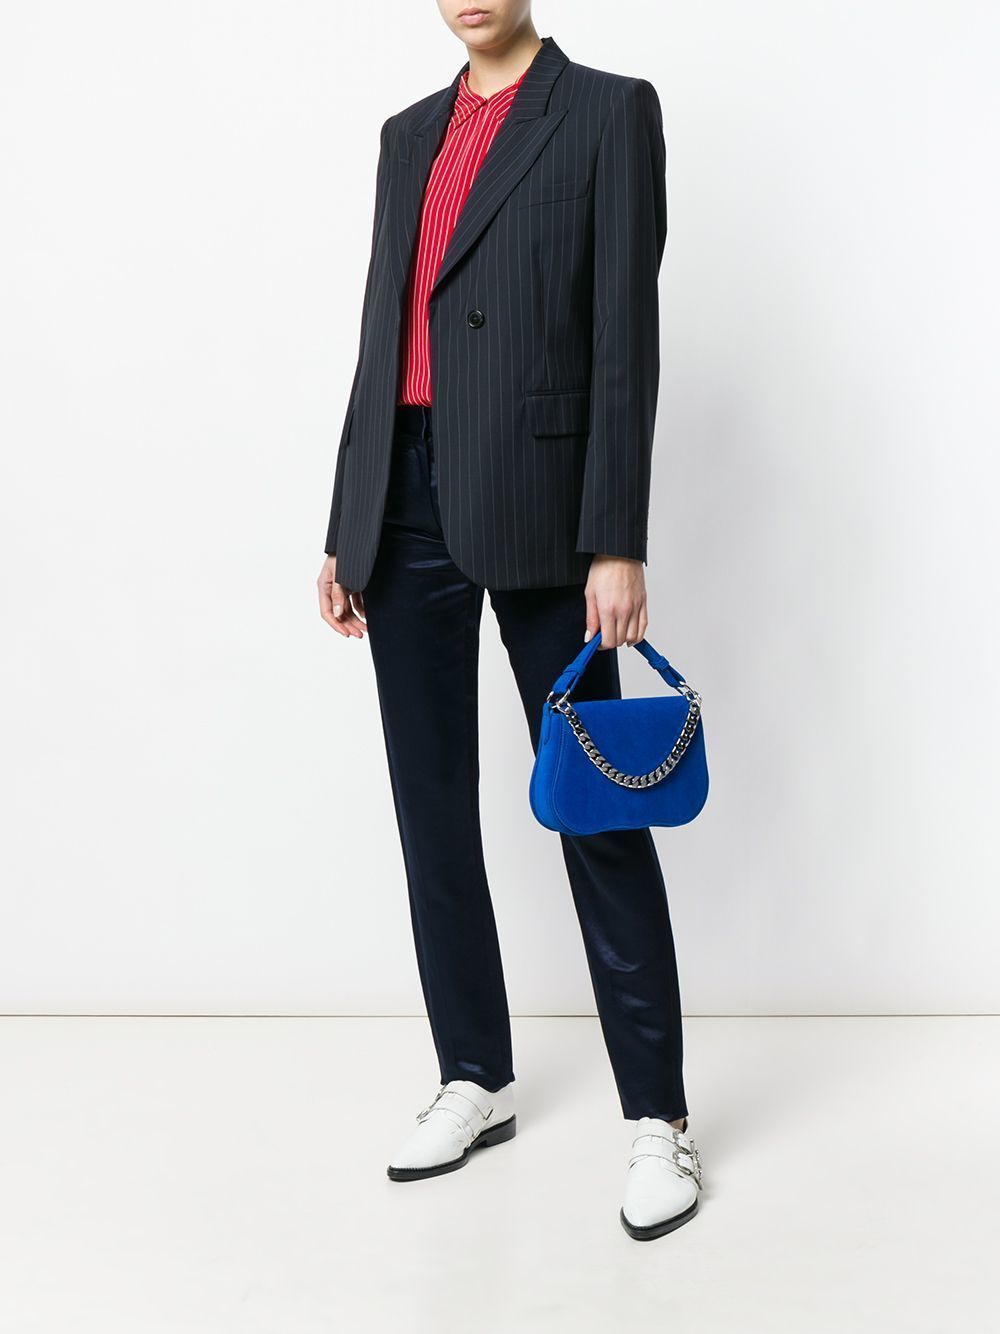 Calvin Klein 205W39nyc Chain Trim Shoulder Bag, $1,208  |  Lookastic